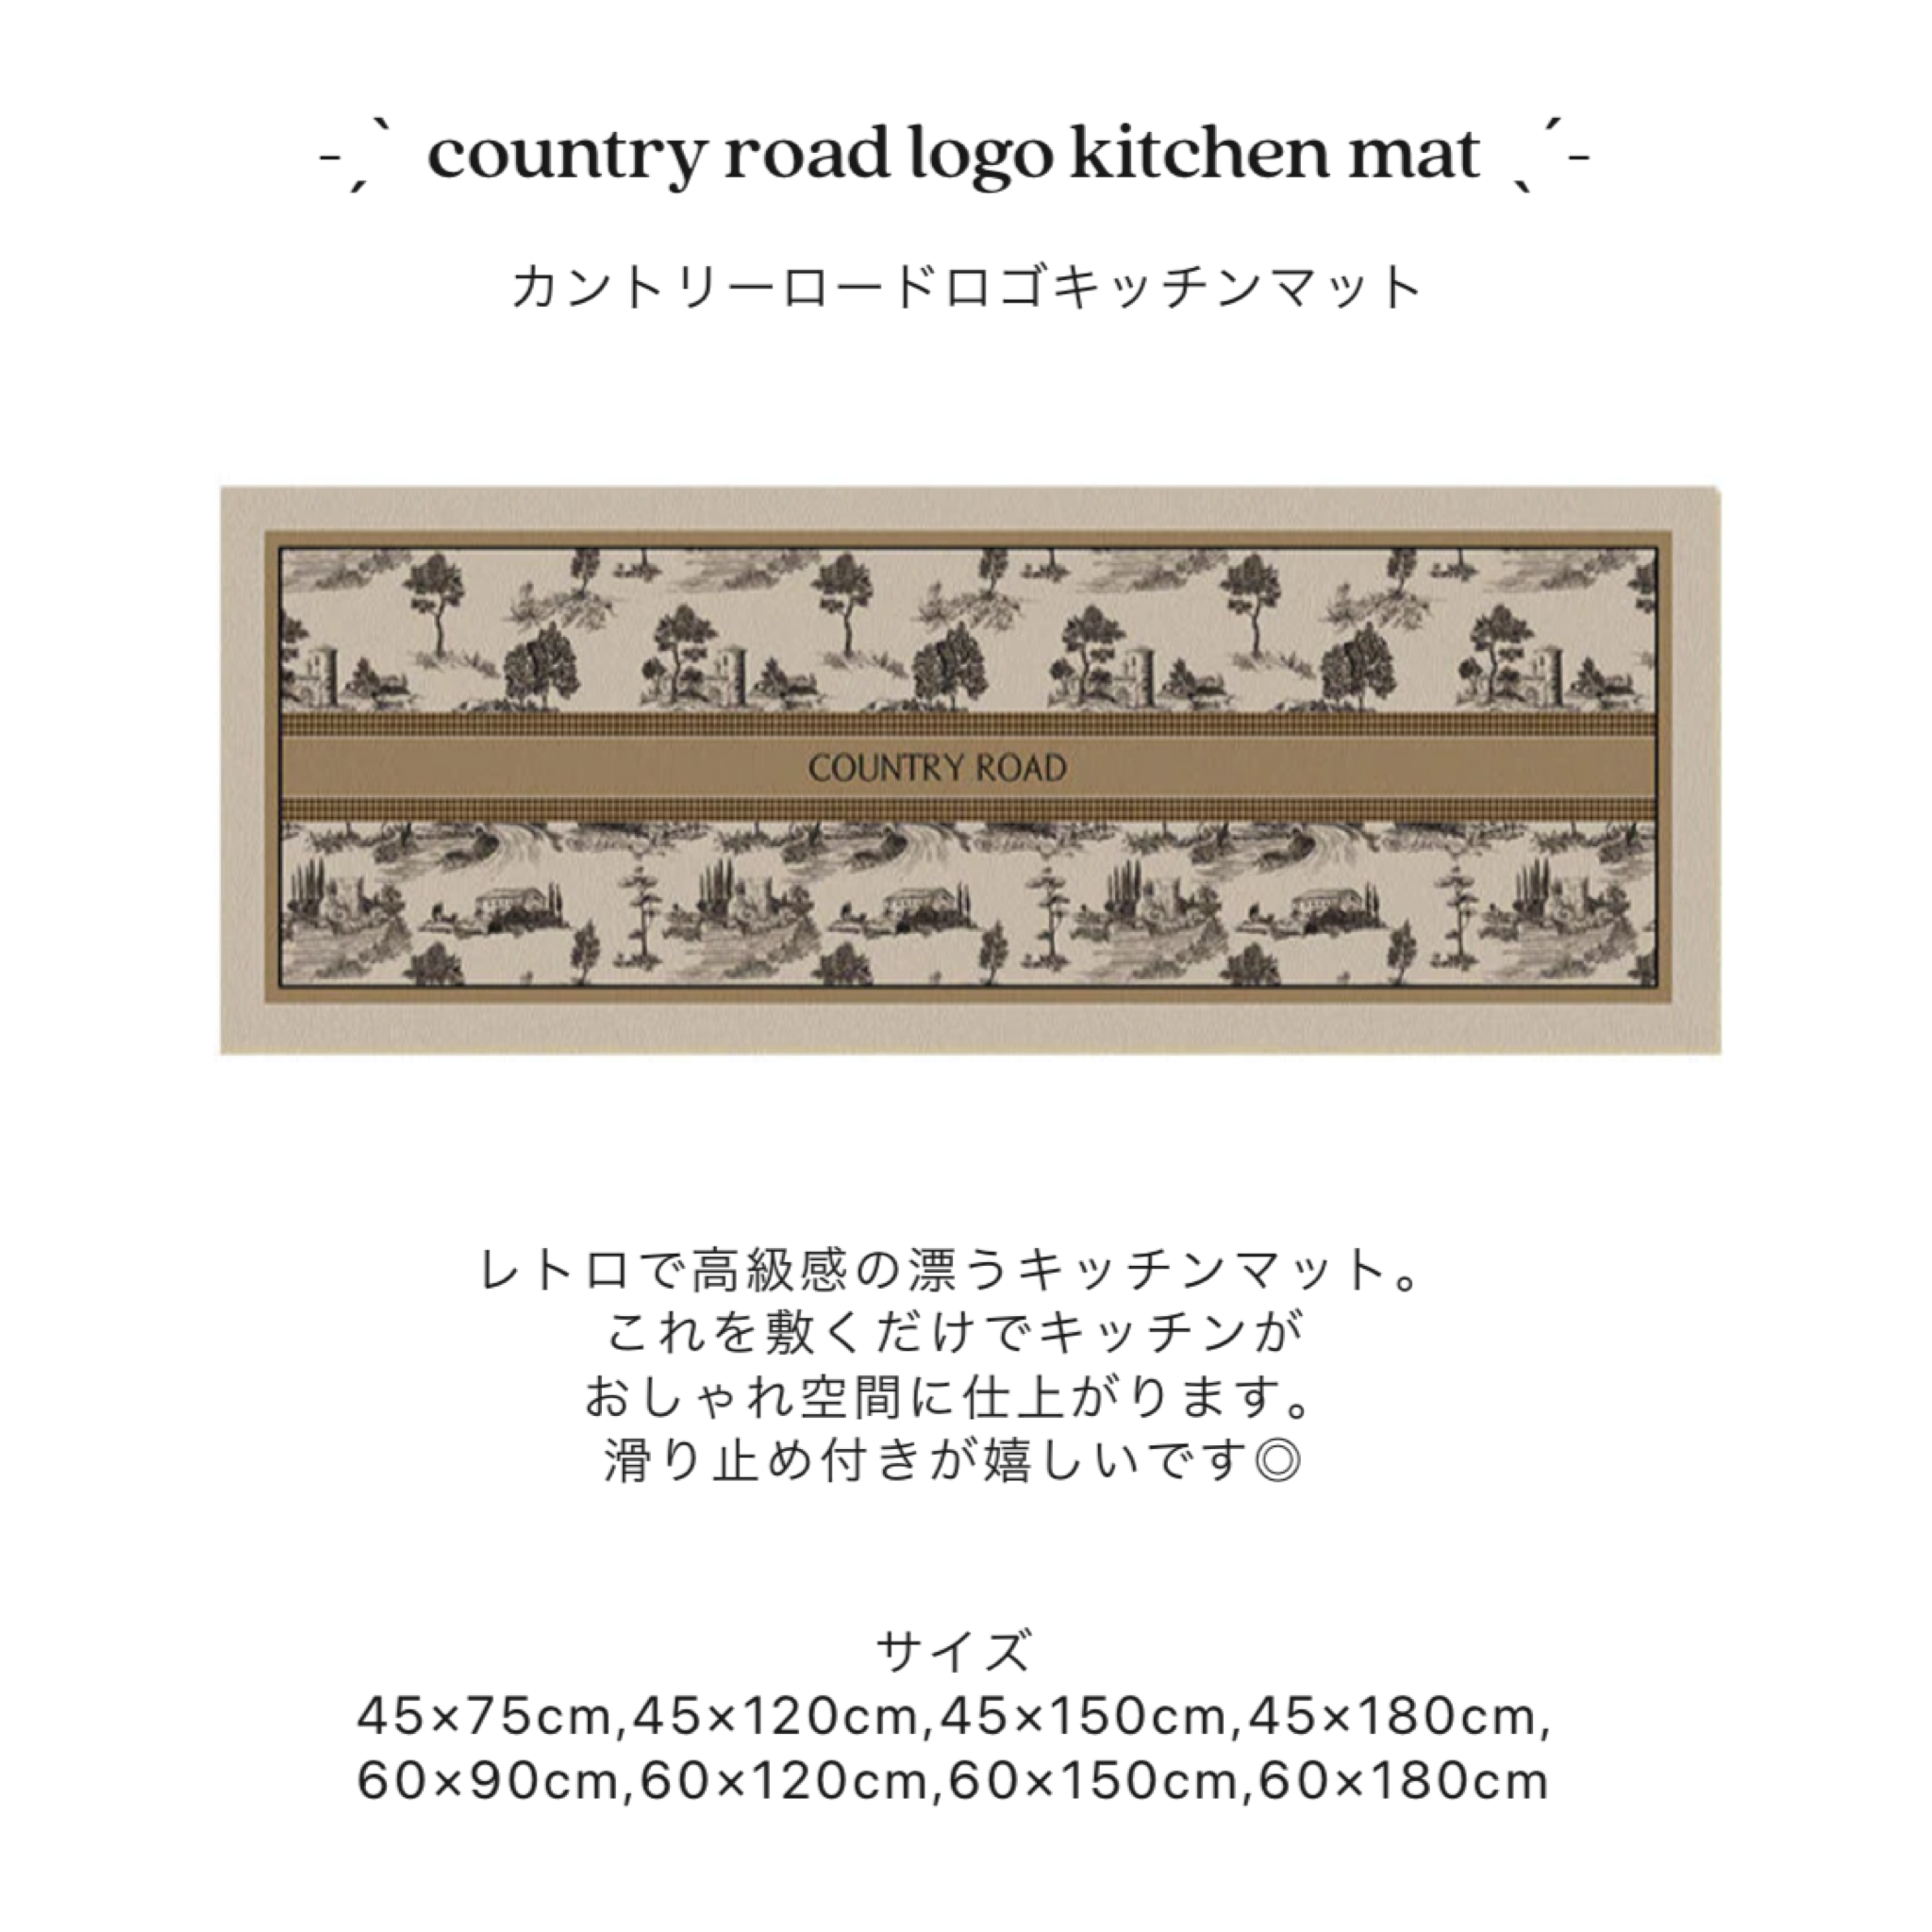 country road logo kitchen mat